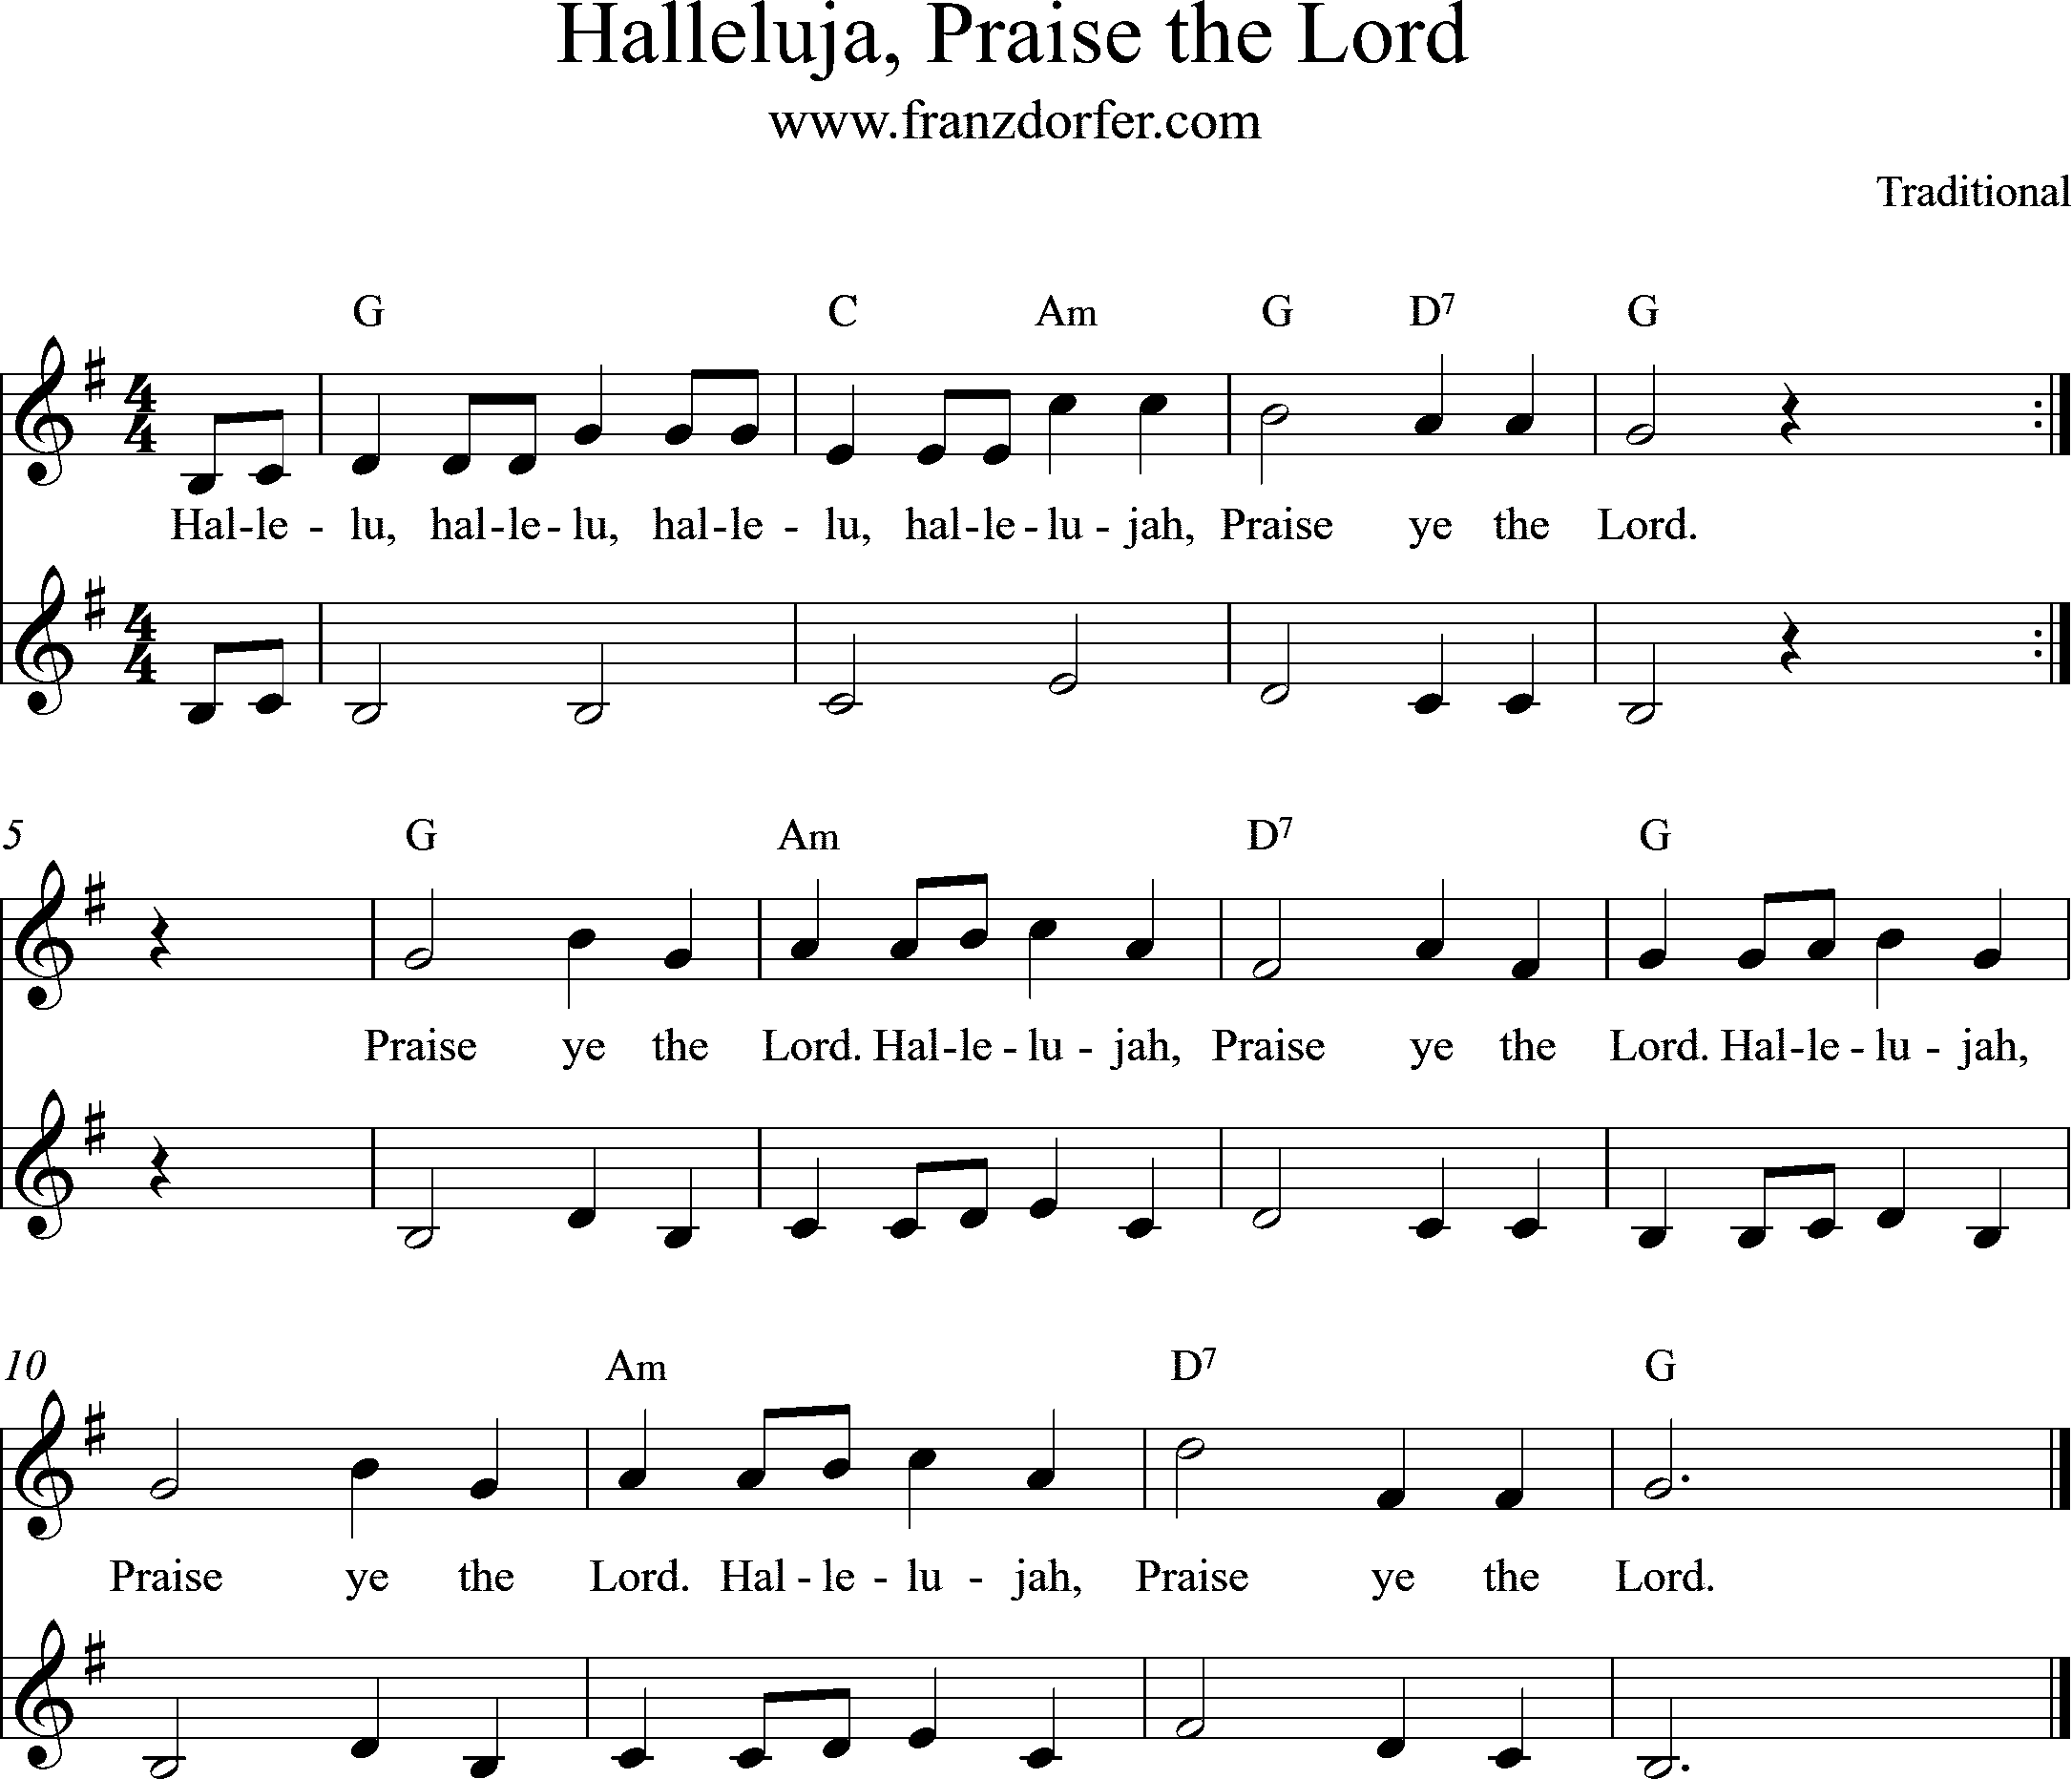 sheetmusic, Halleluja, praise the lord